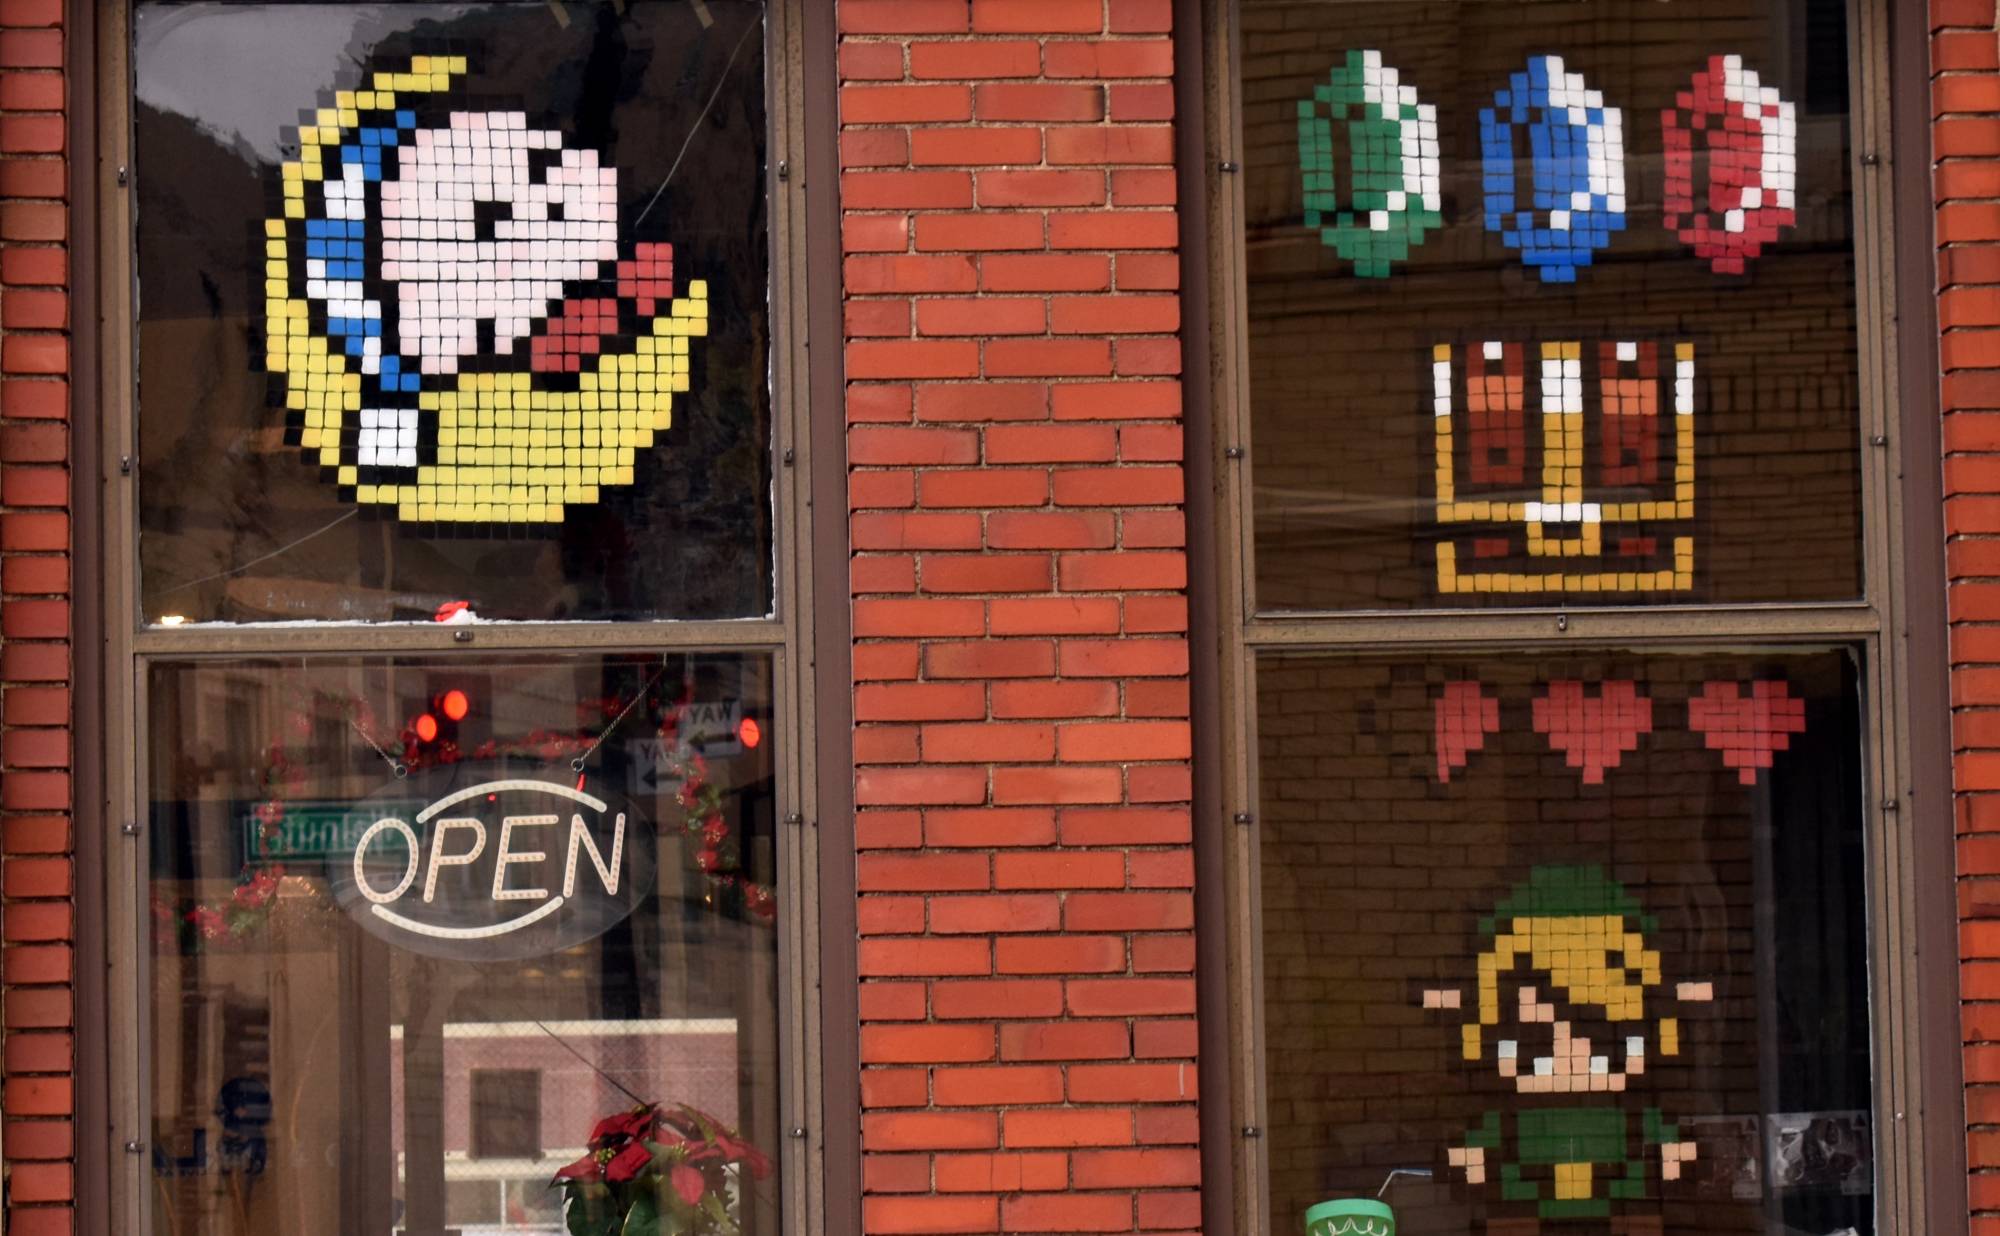 Pixel art on windows